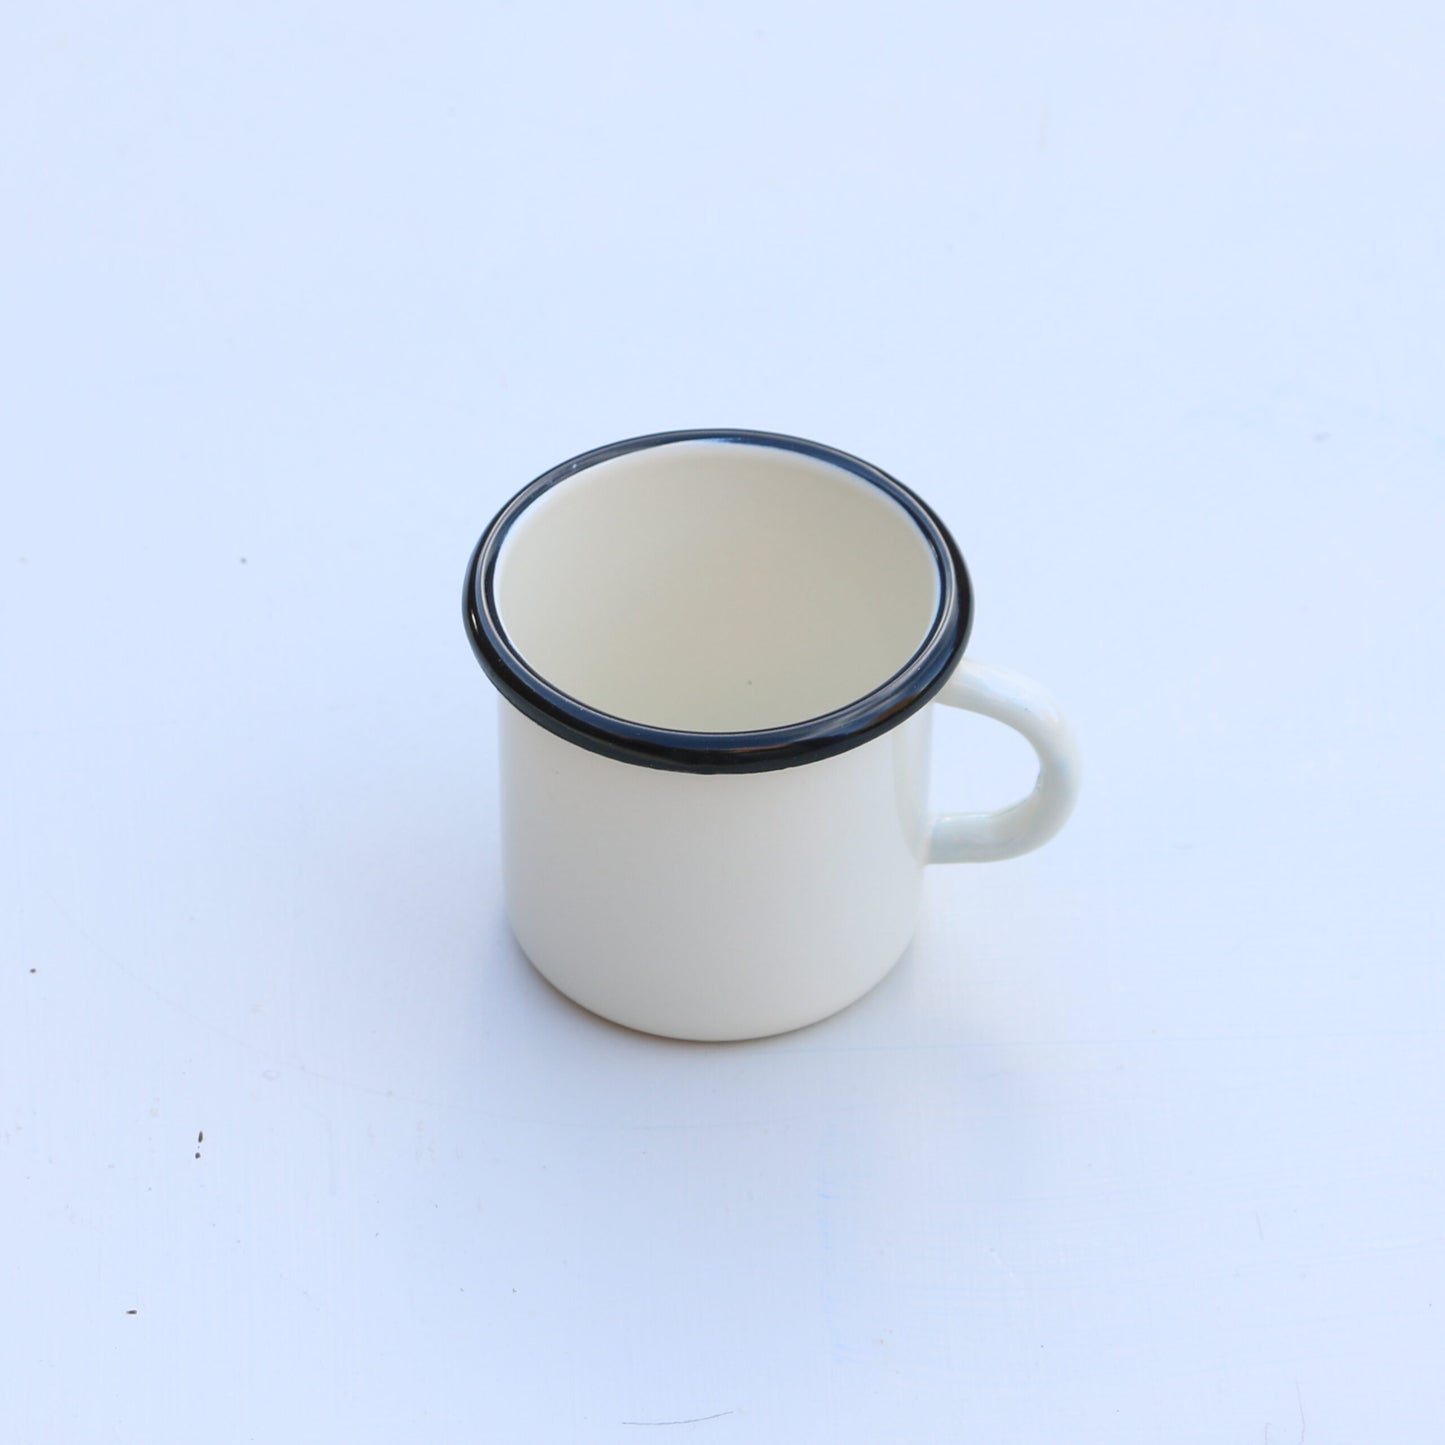 Enamel mug: Cream